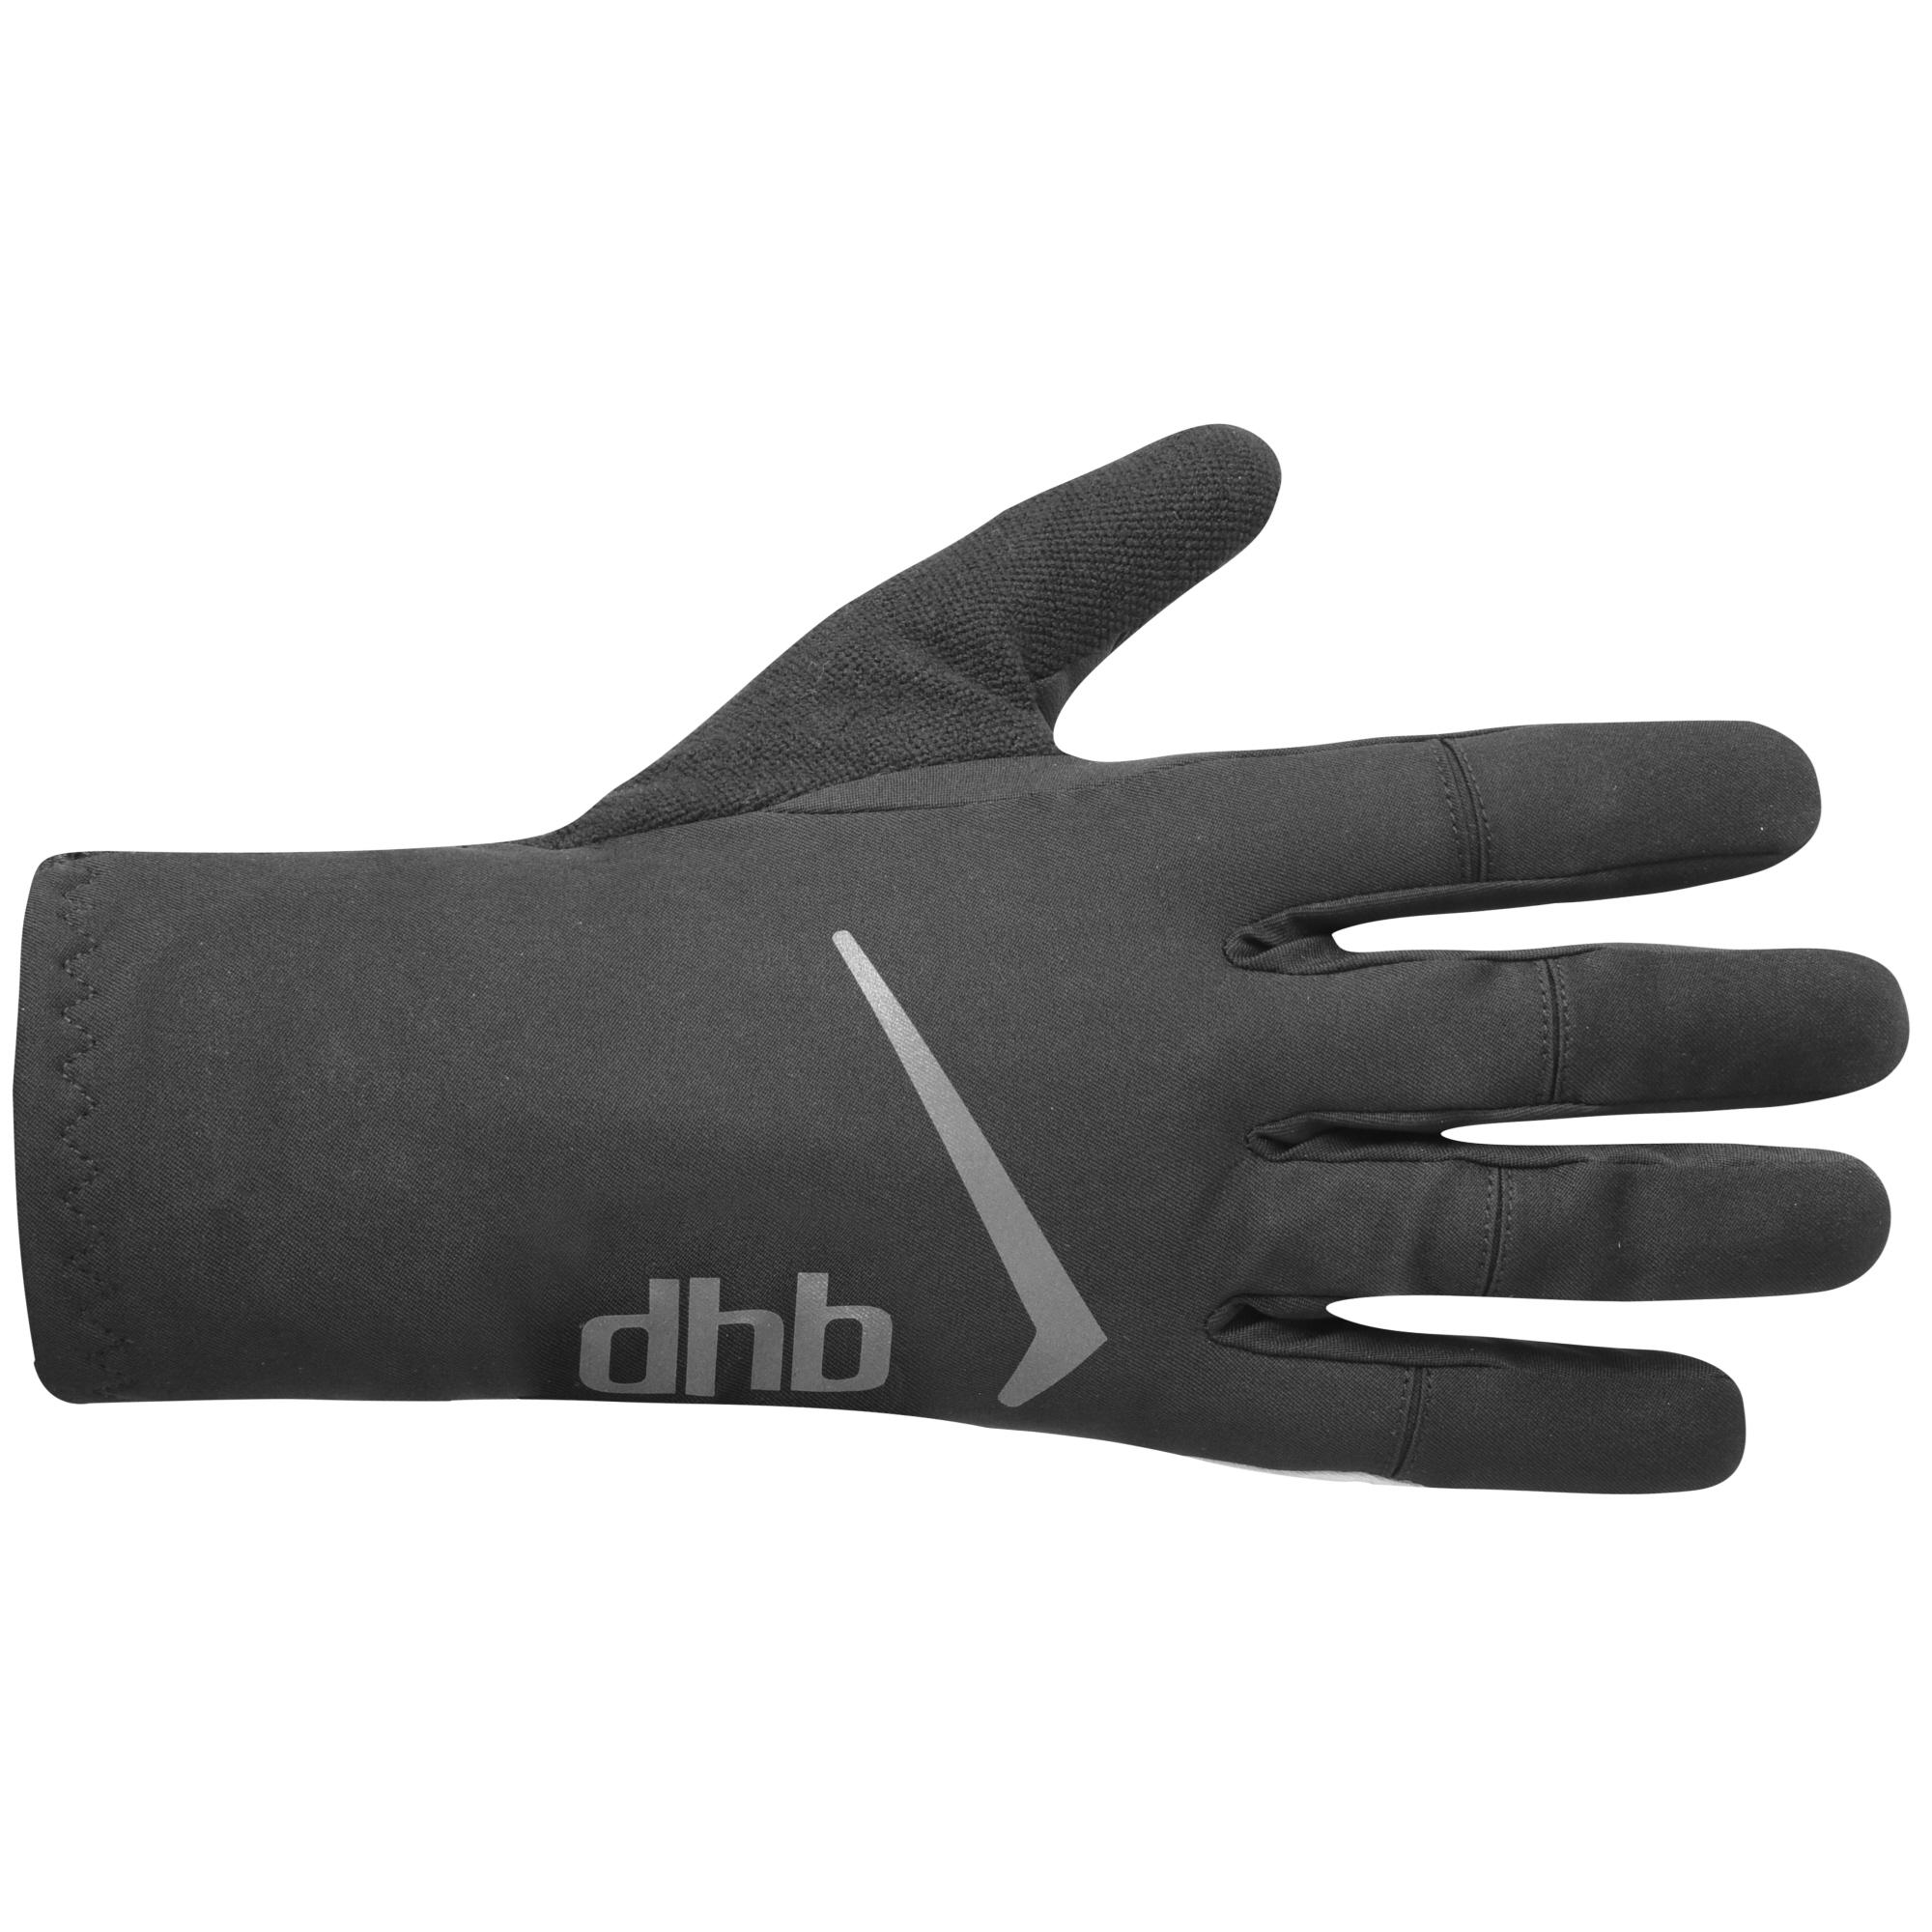 Dhb Deep Winter Flt Glove - Black